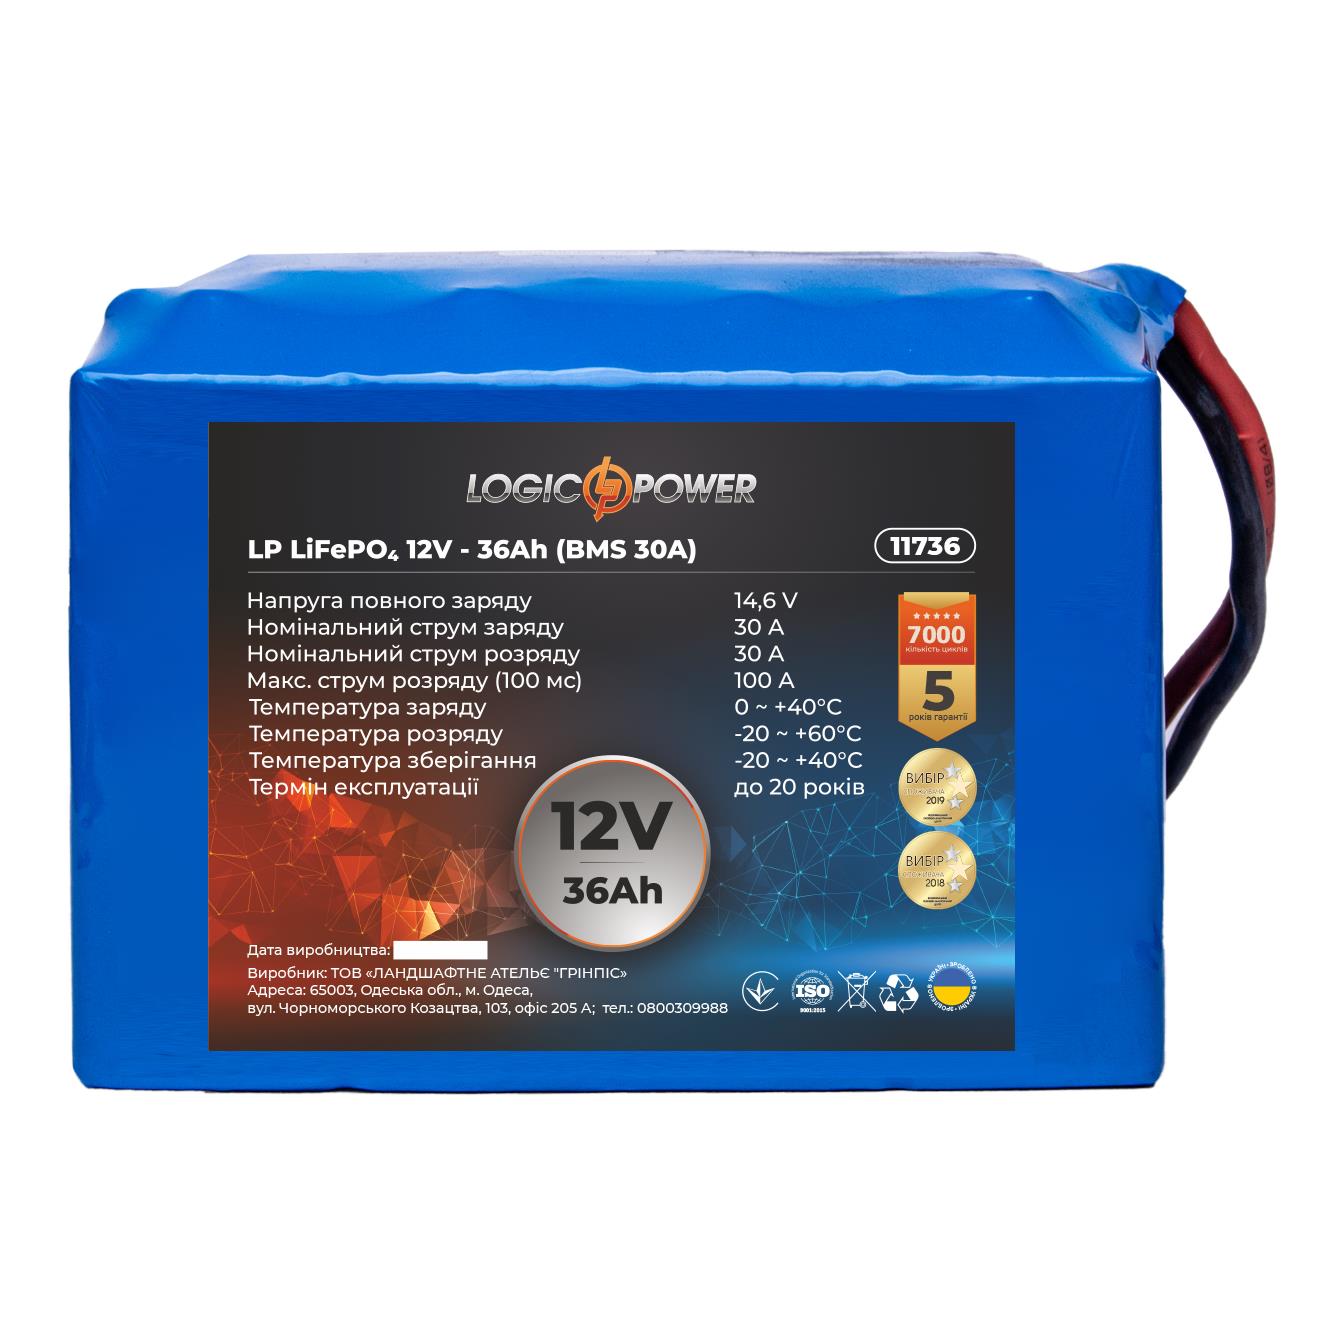 Цена аккумулятор литий-железо-фосфатный LogicPower LP LiFePO4 12V - 36 Ah (BMS 30A) (11736) в Львове